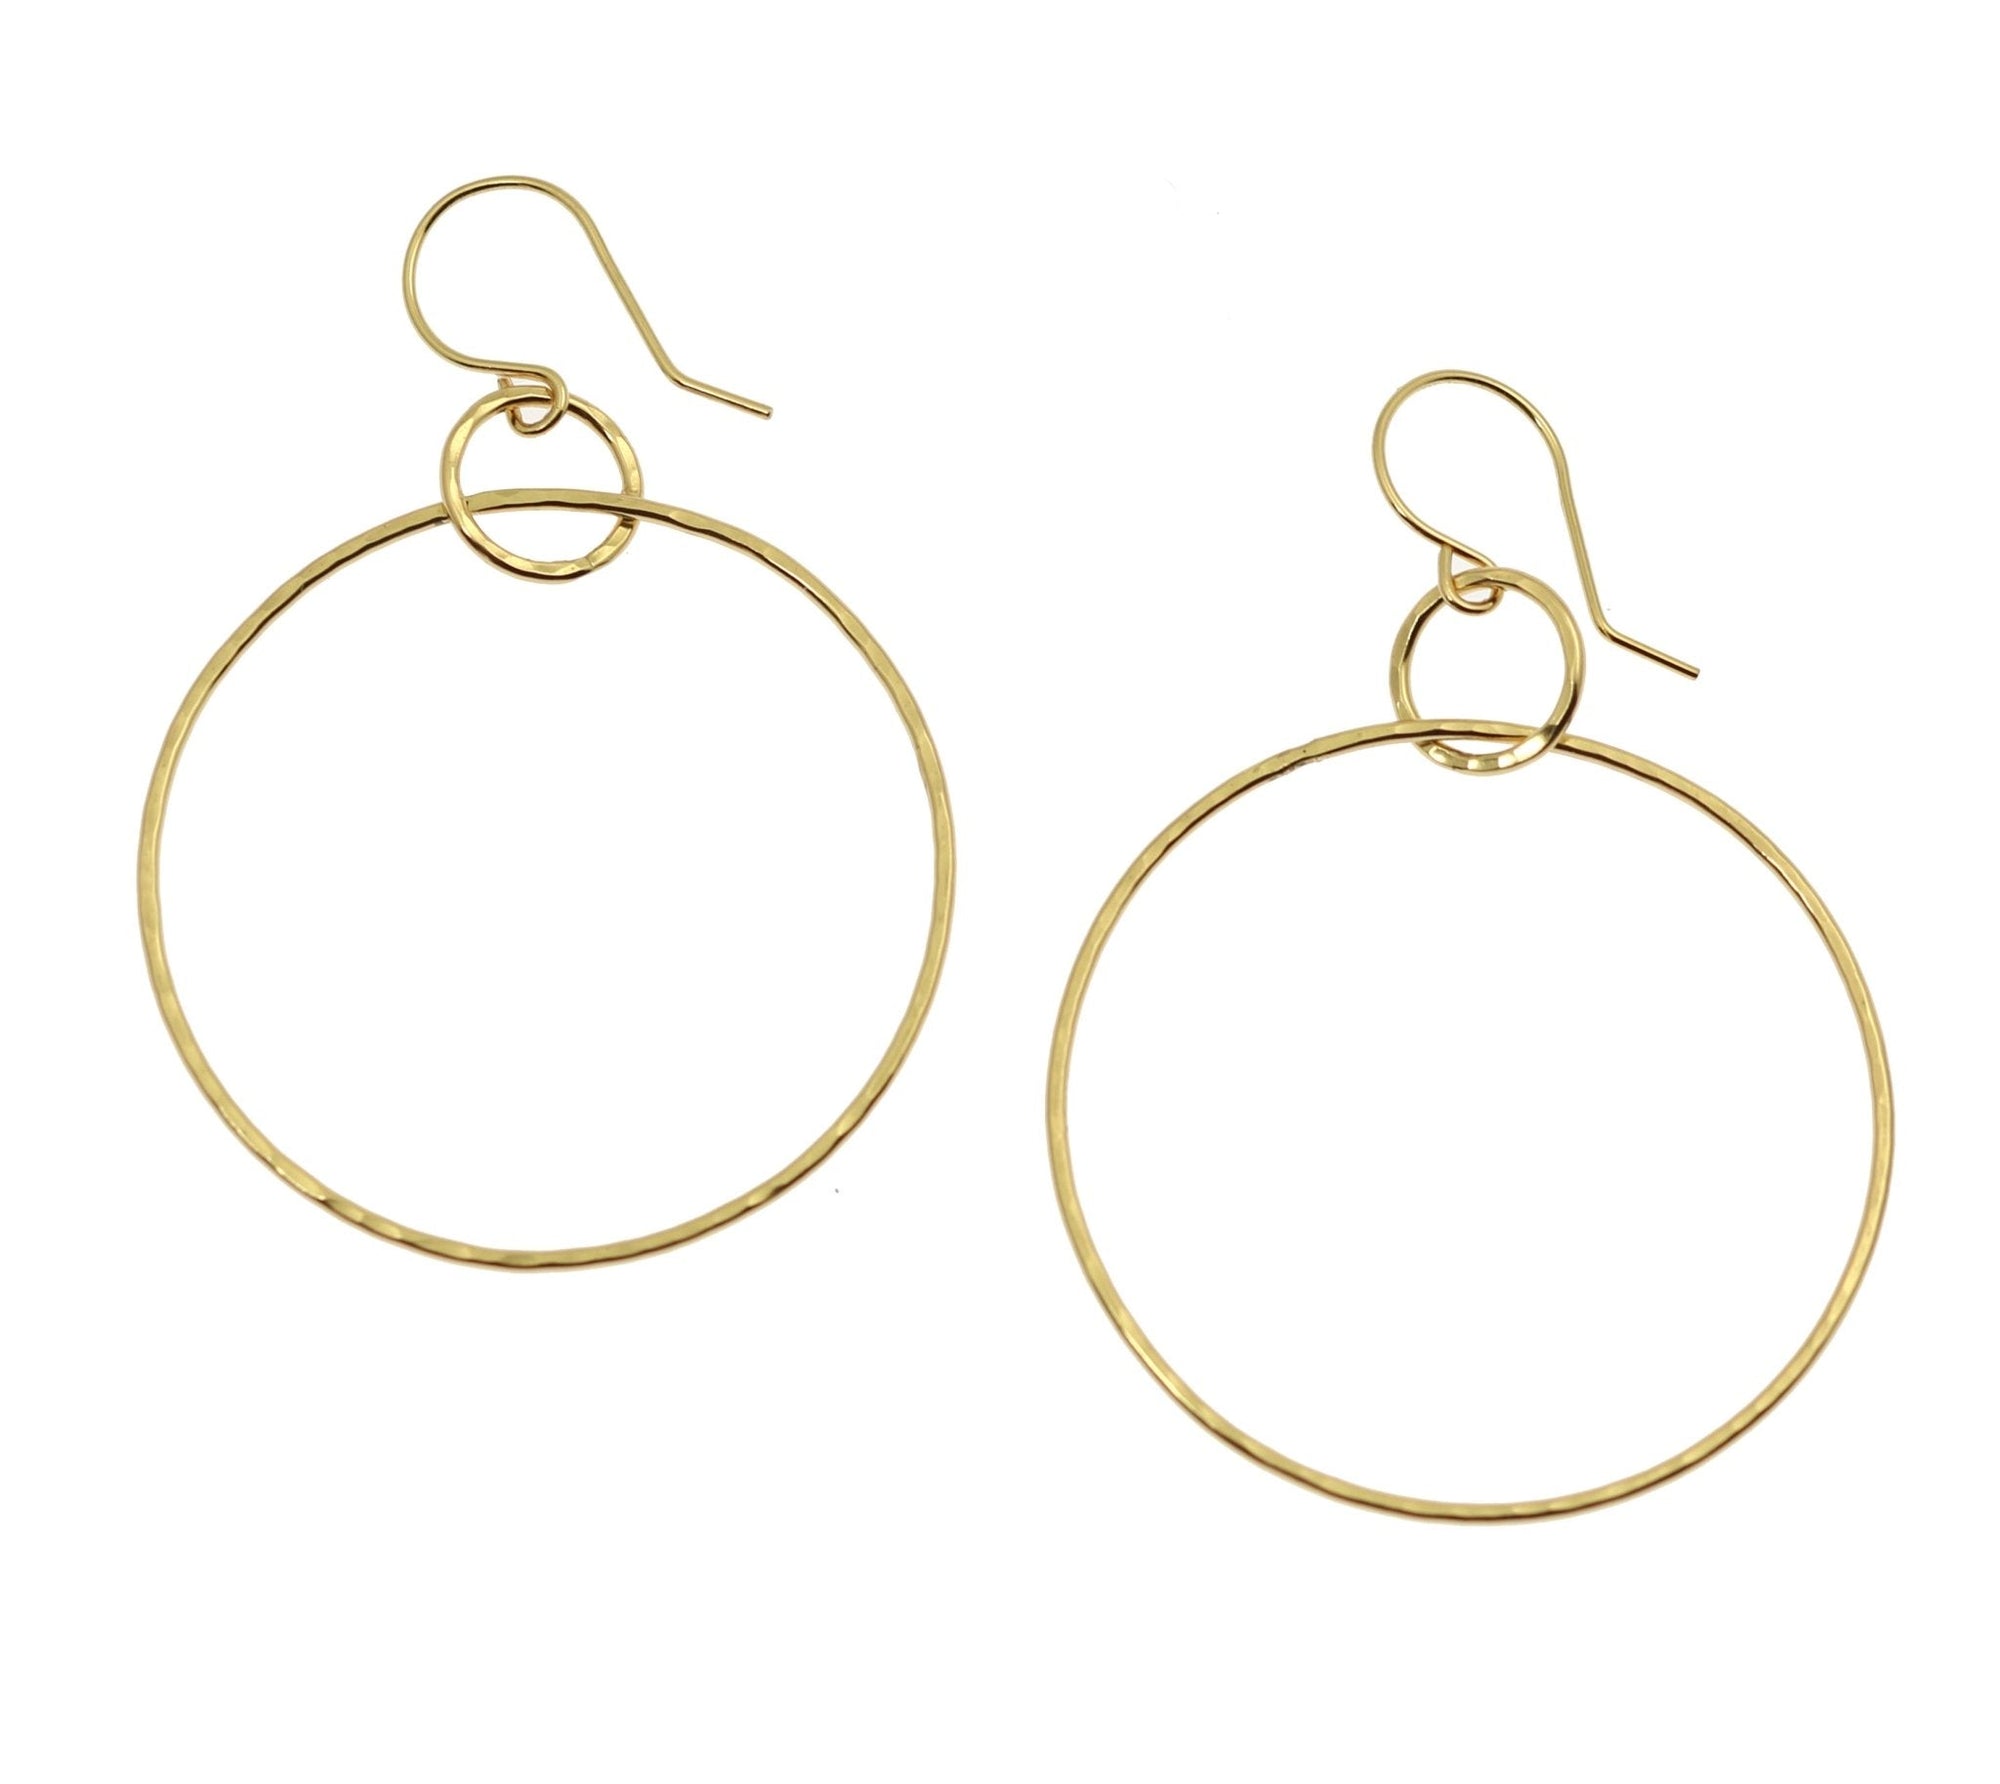 Detail View of Hammered Nu Gold Brass Hoop Earrings